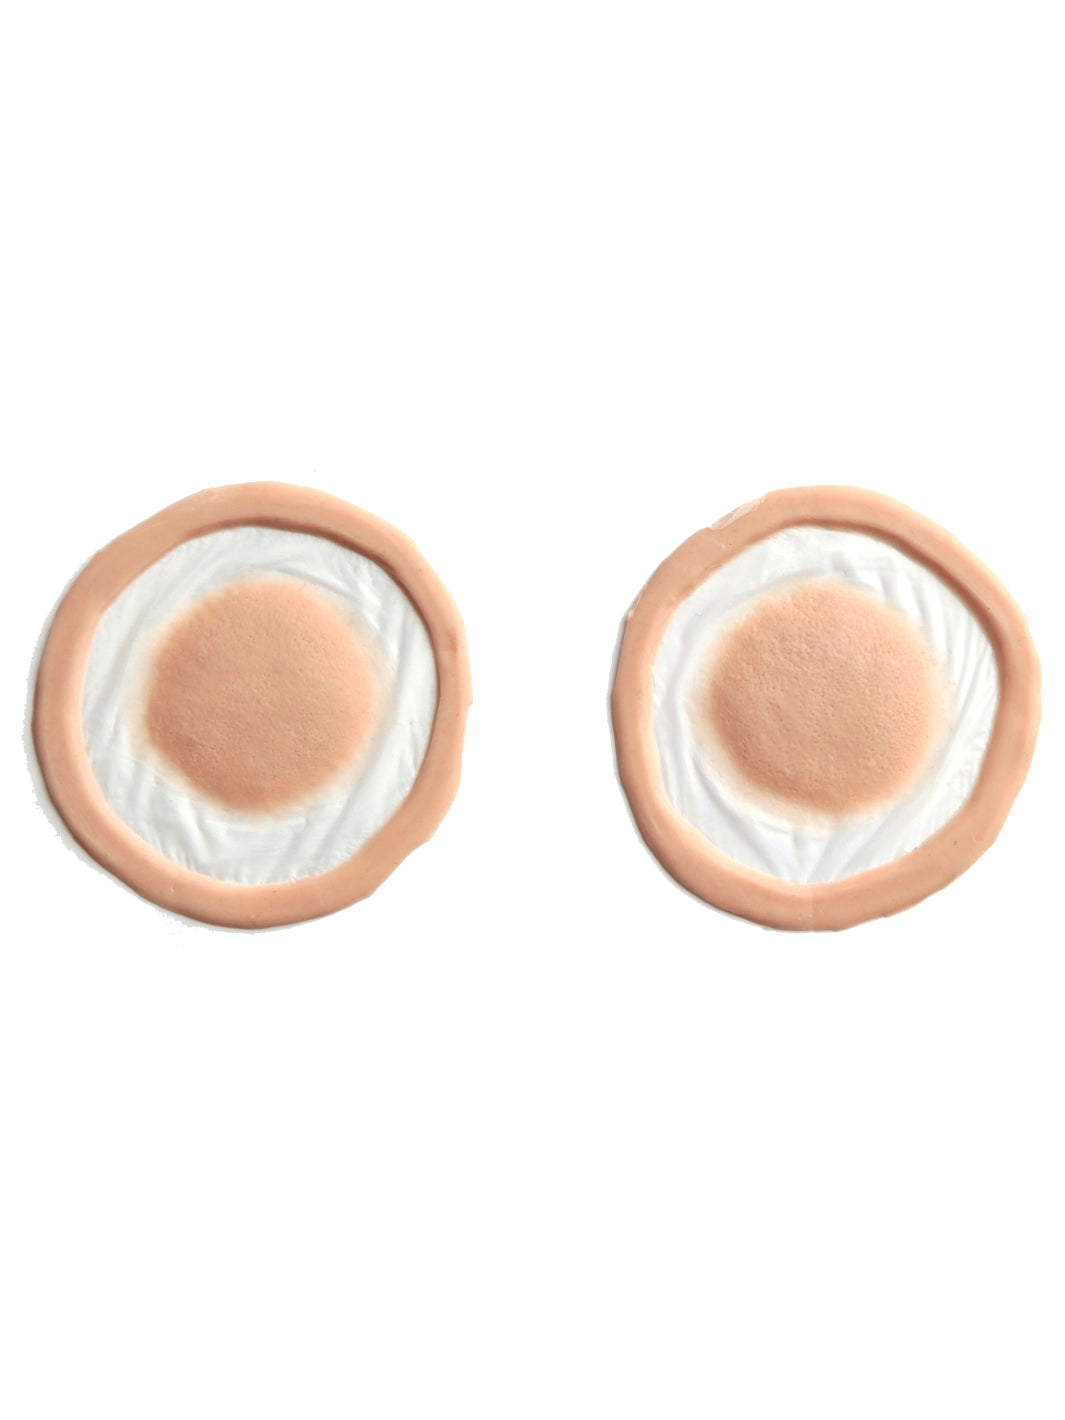 Nipple Covers Silicone Prosthetics